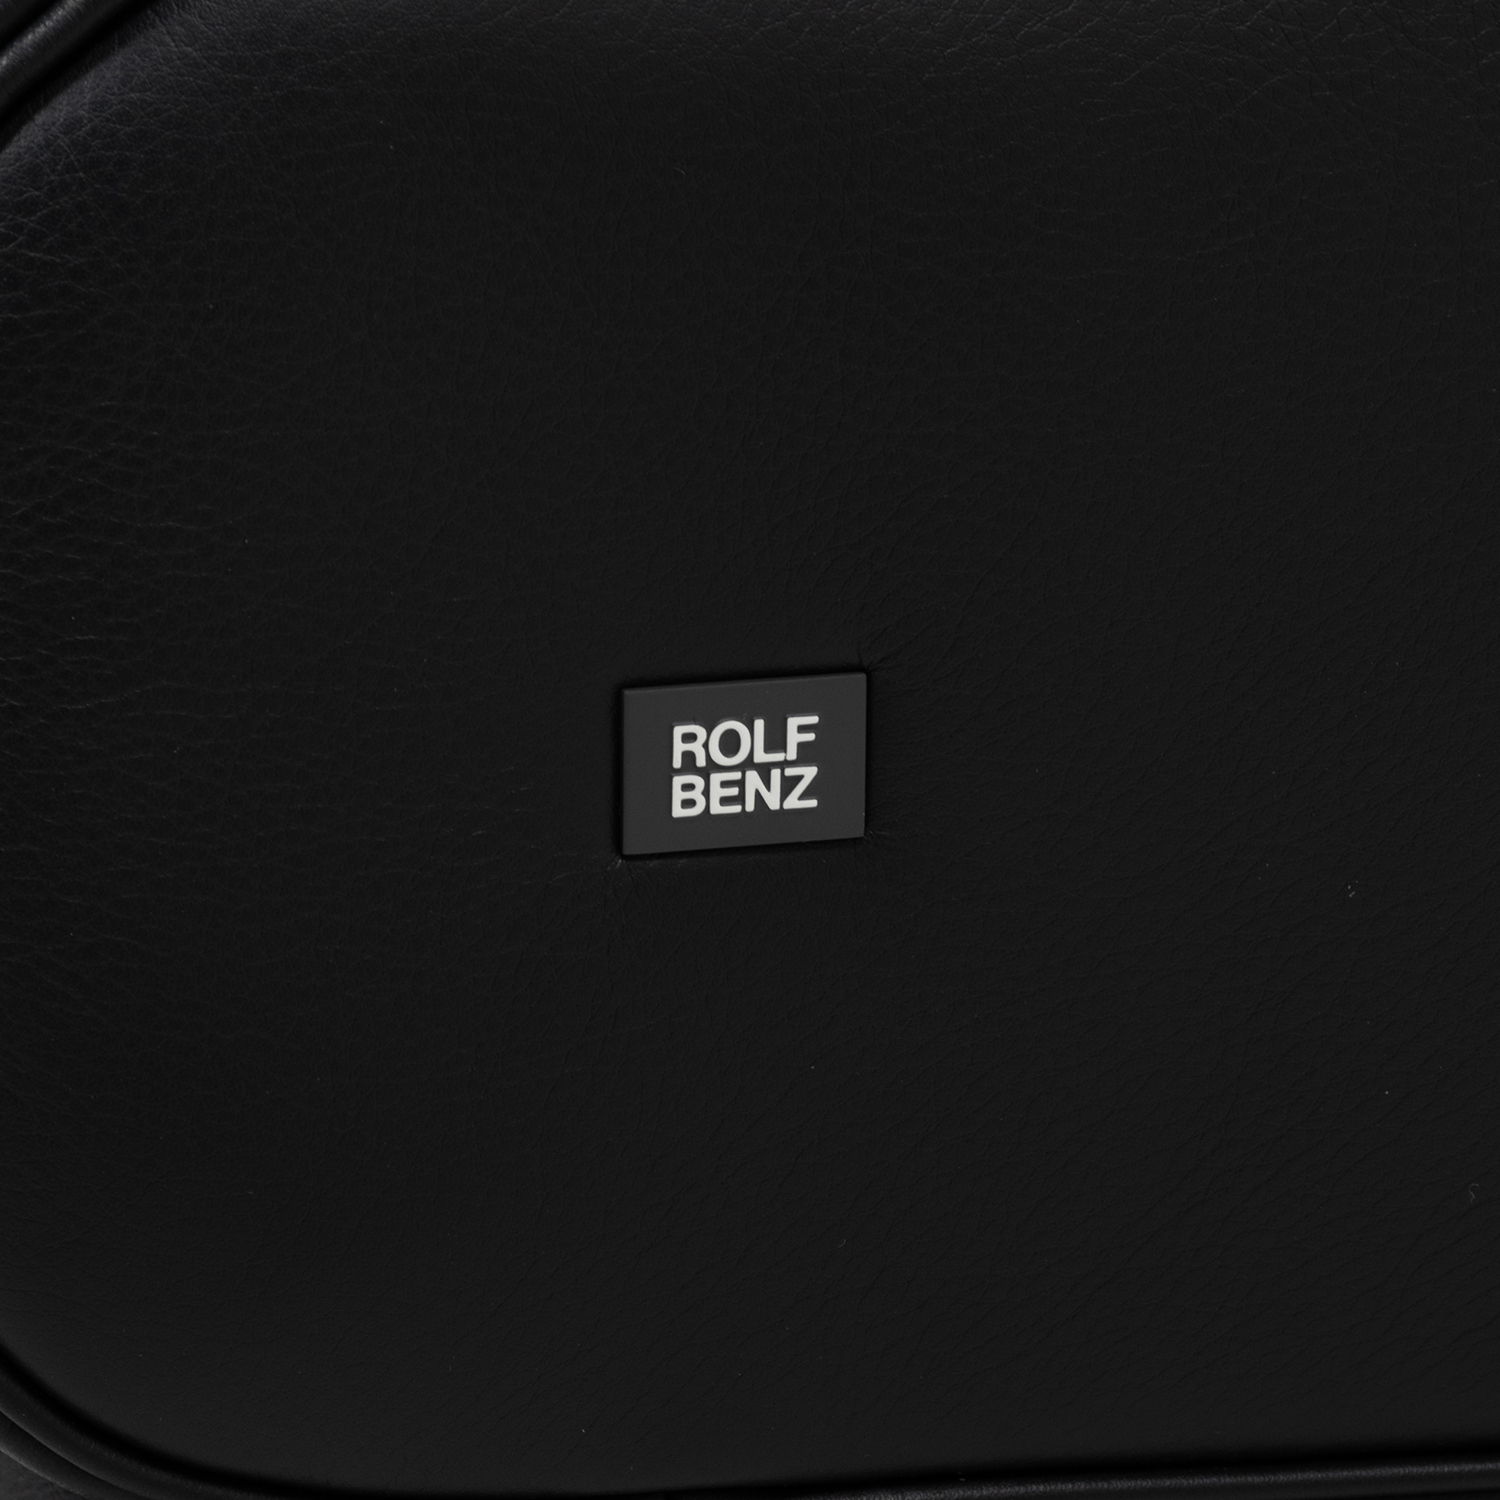 ROLF BENZ（ロルフベンツ）アームチェア 「6500」 革ブラック色